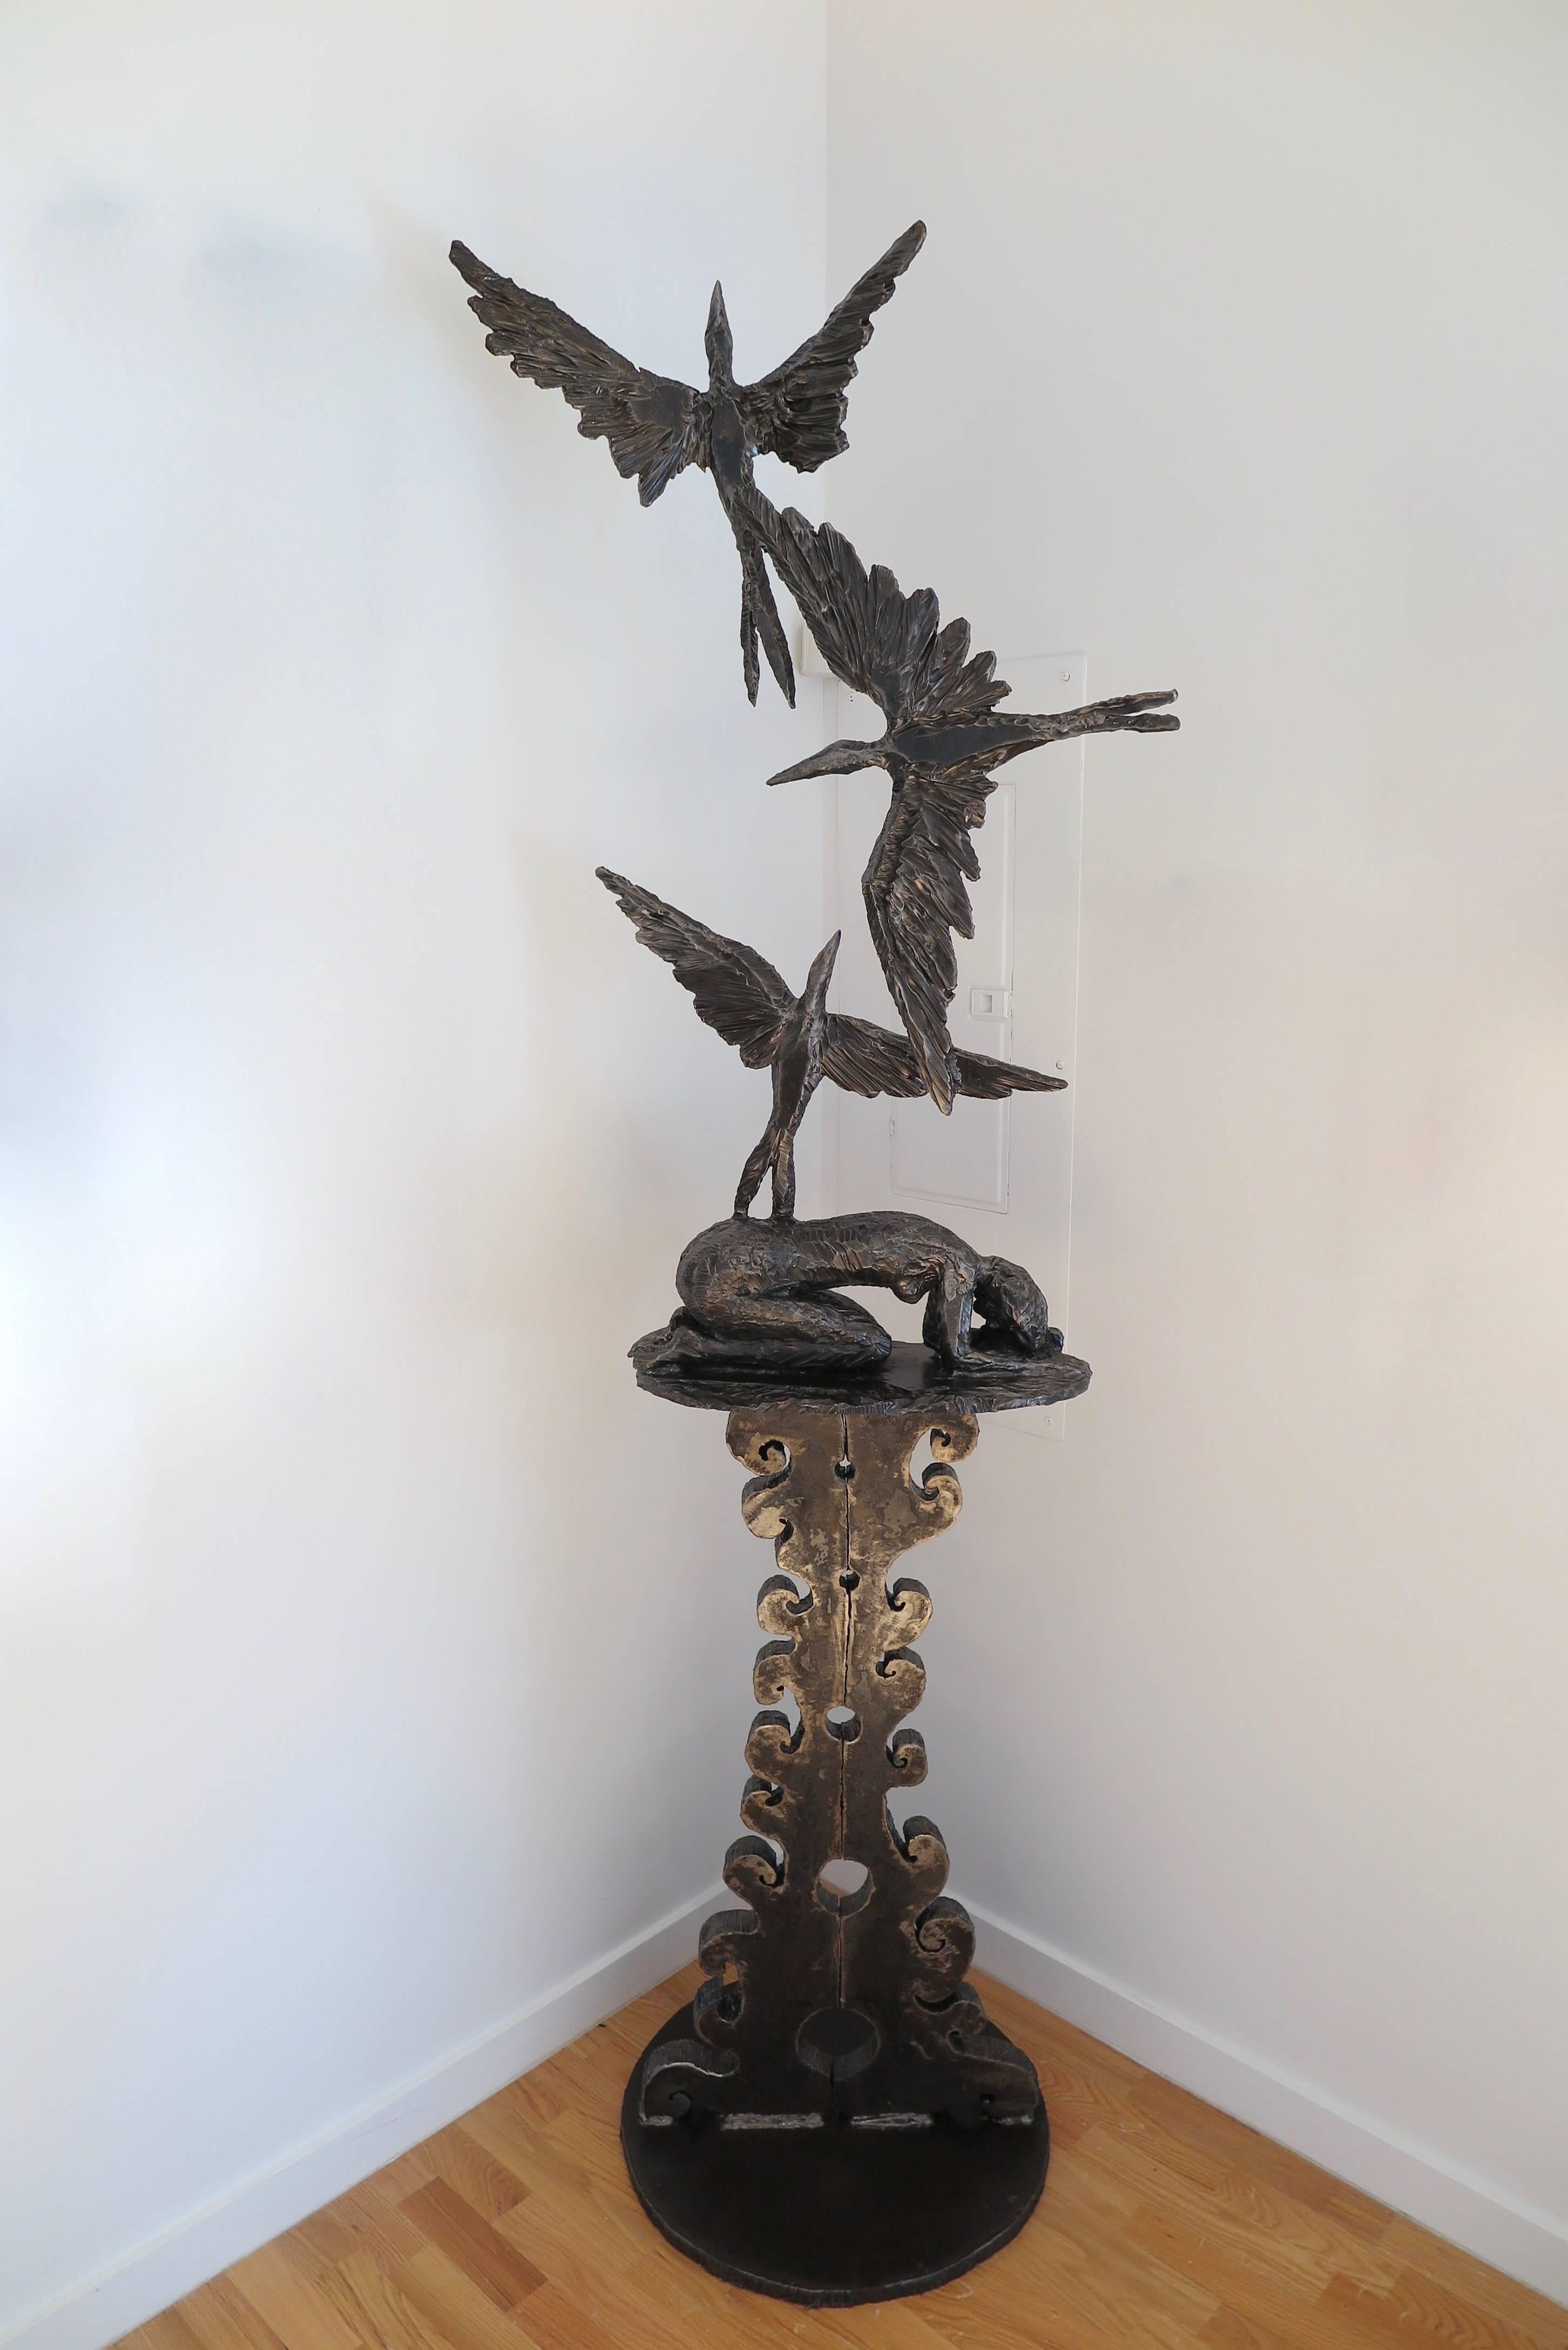 Russell Whiting Figurative Sculpture - Dreamer of Birds, Steel Sculpture